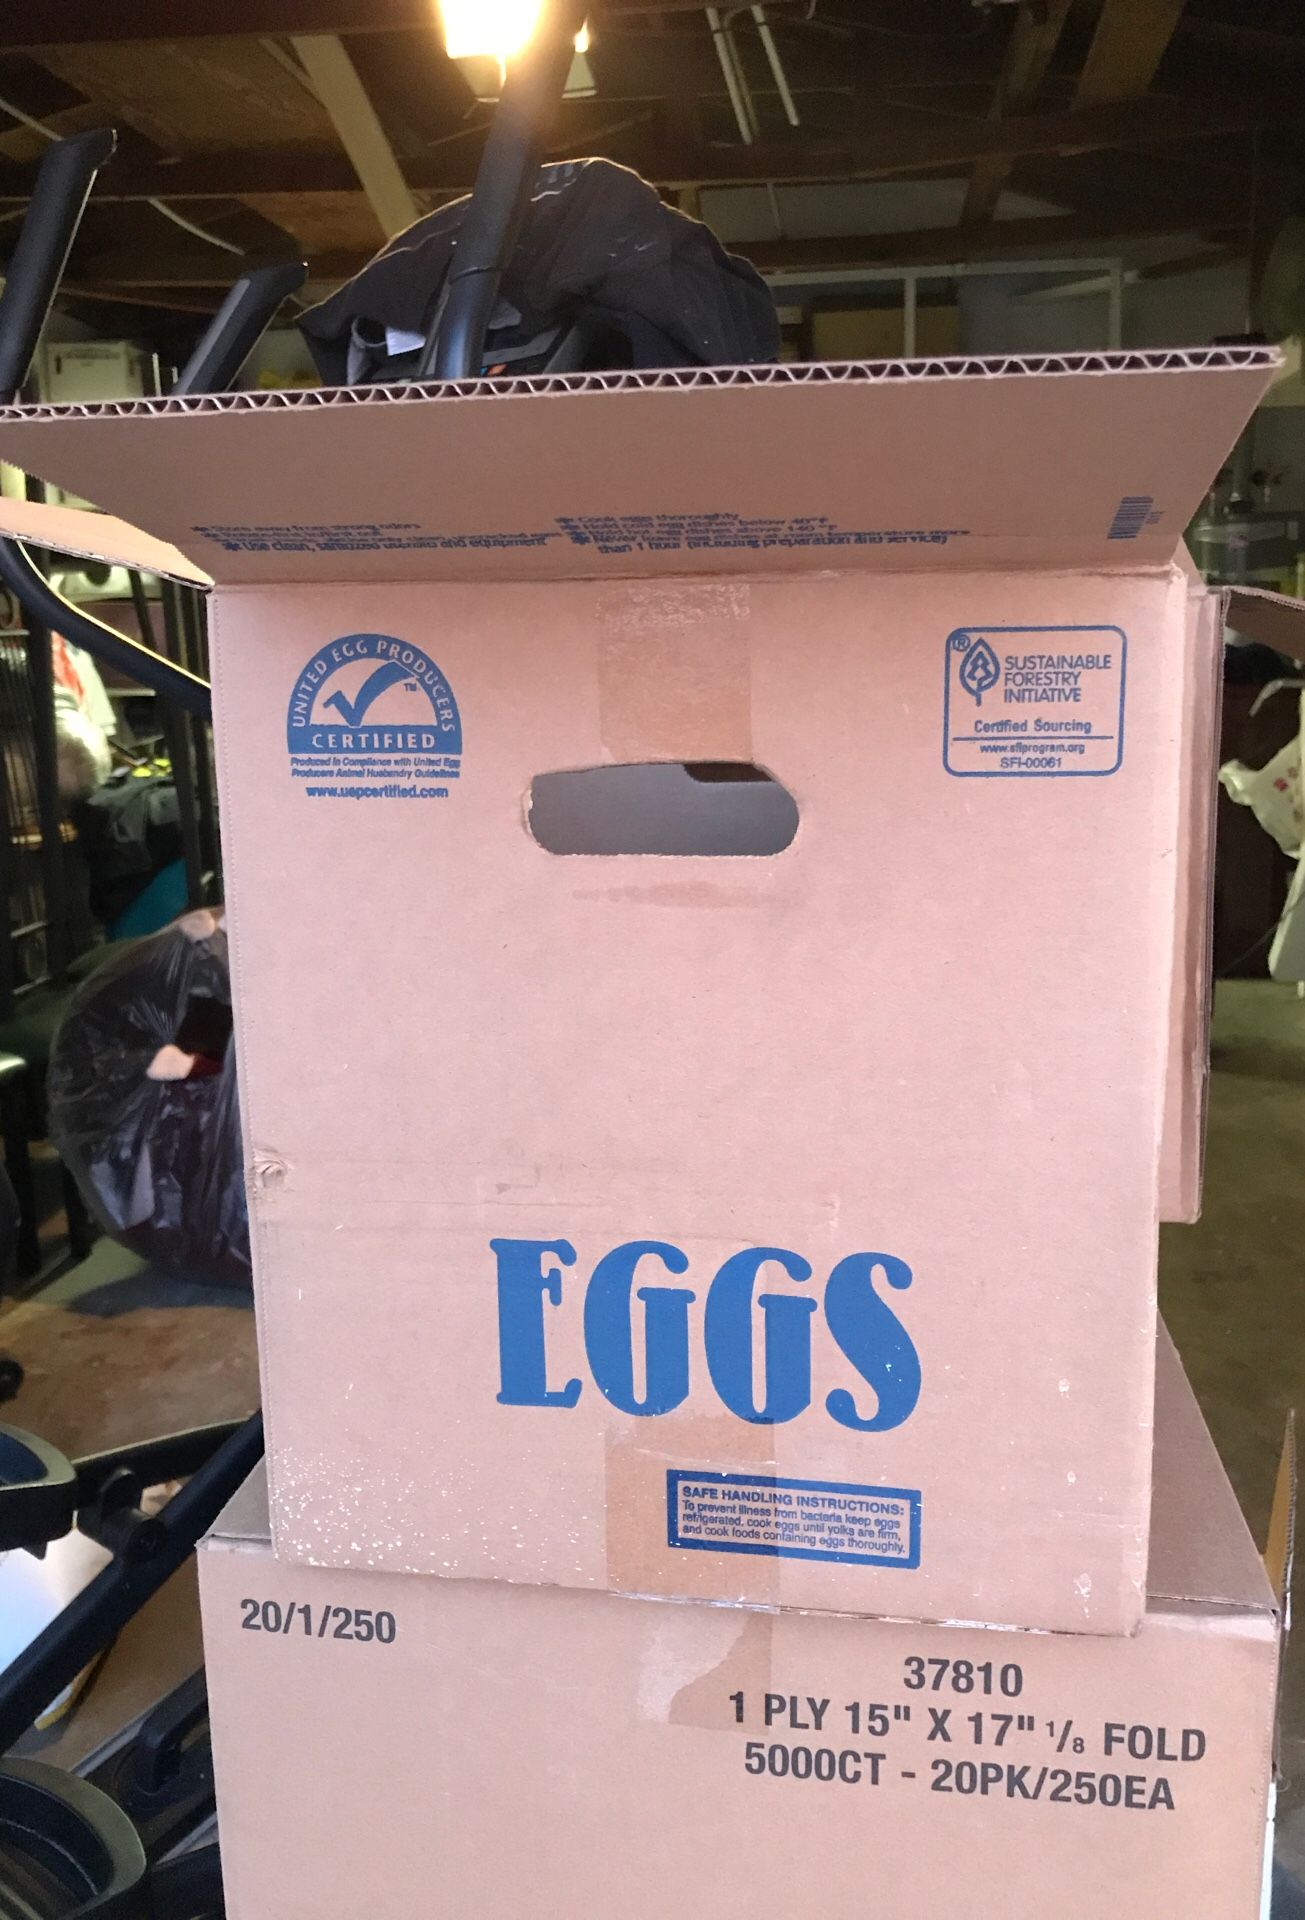 15 Dozen Eggs for sale